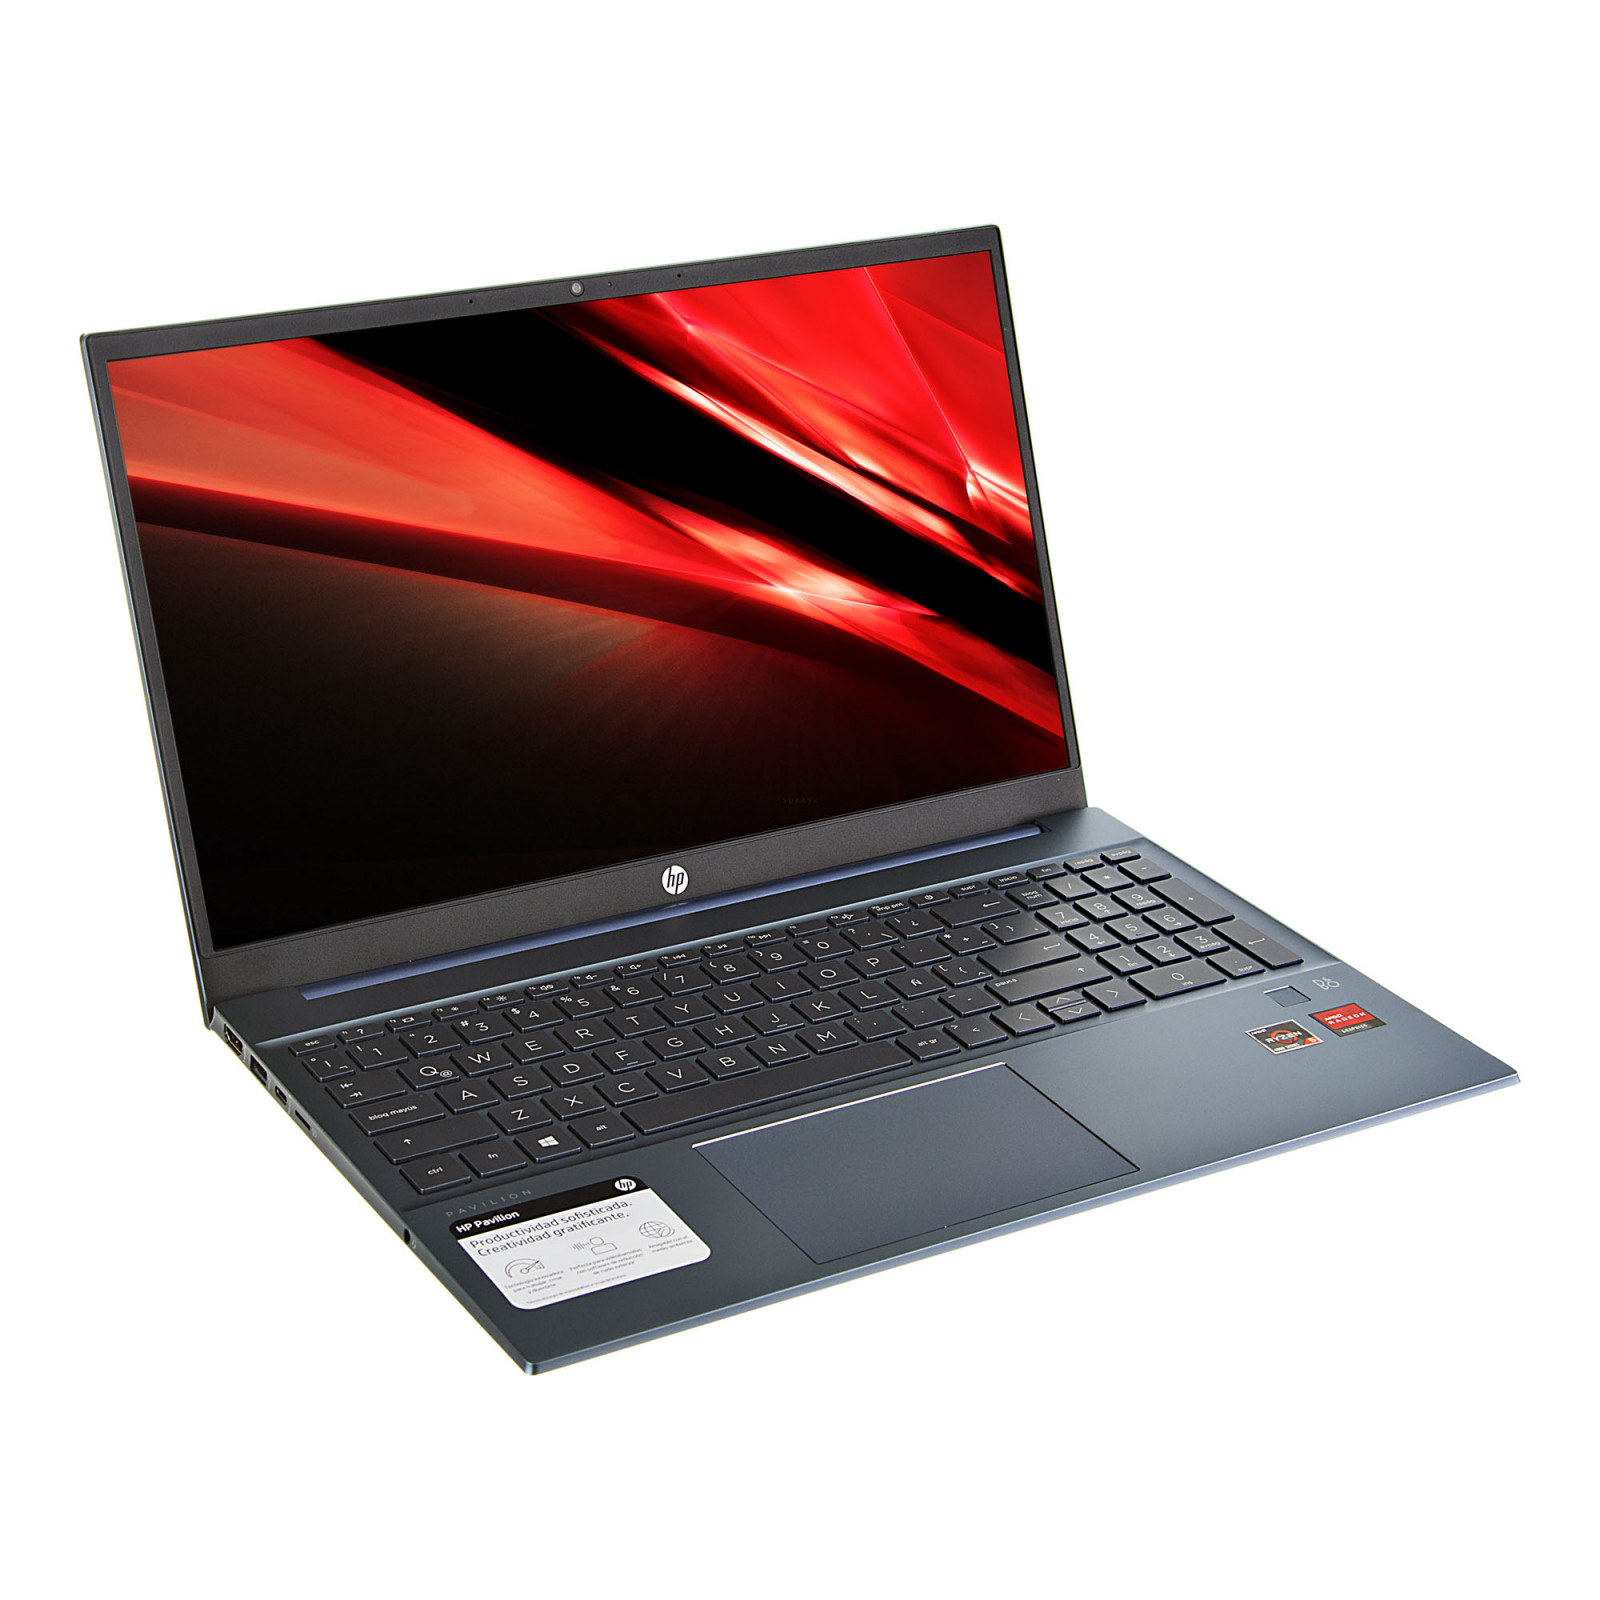 Laptop 15-eh0002la Ryzen 5 4500U 8GB / 512GB SSD Win10 Home 15.6" HP